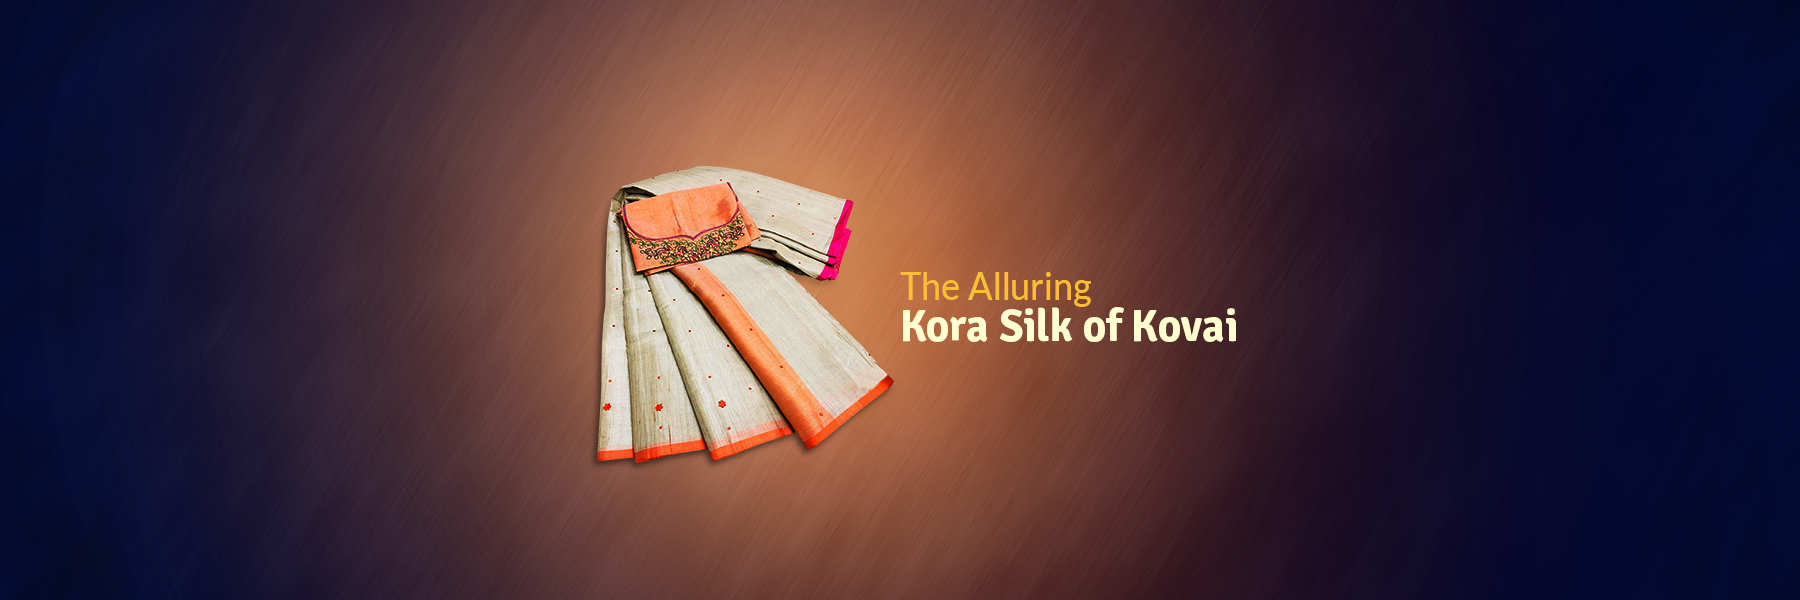 The Alluring Kora Silk of Kovai FromIndia.com